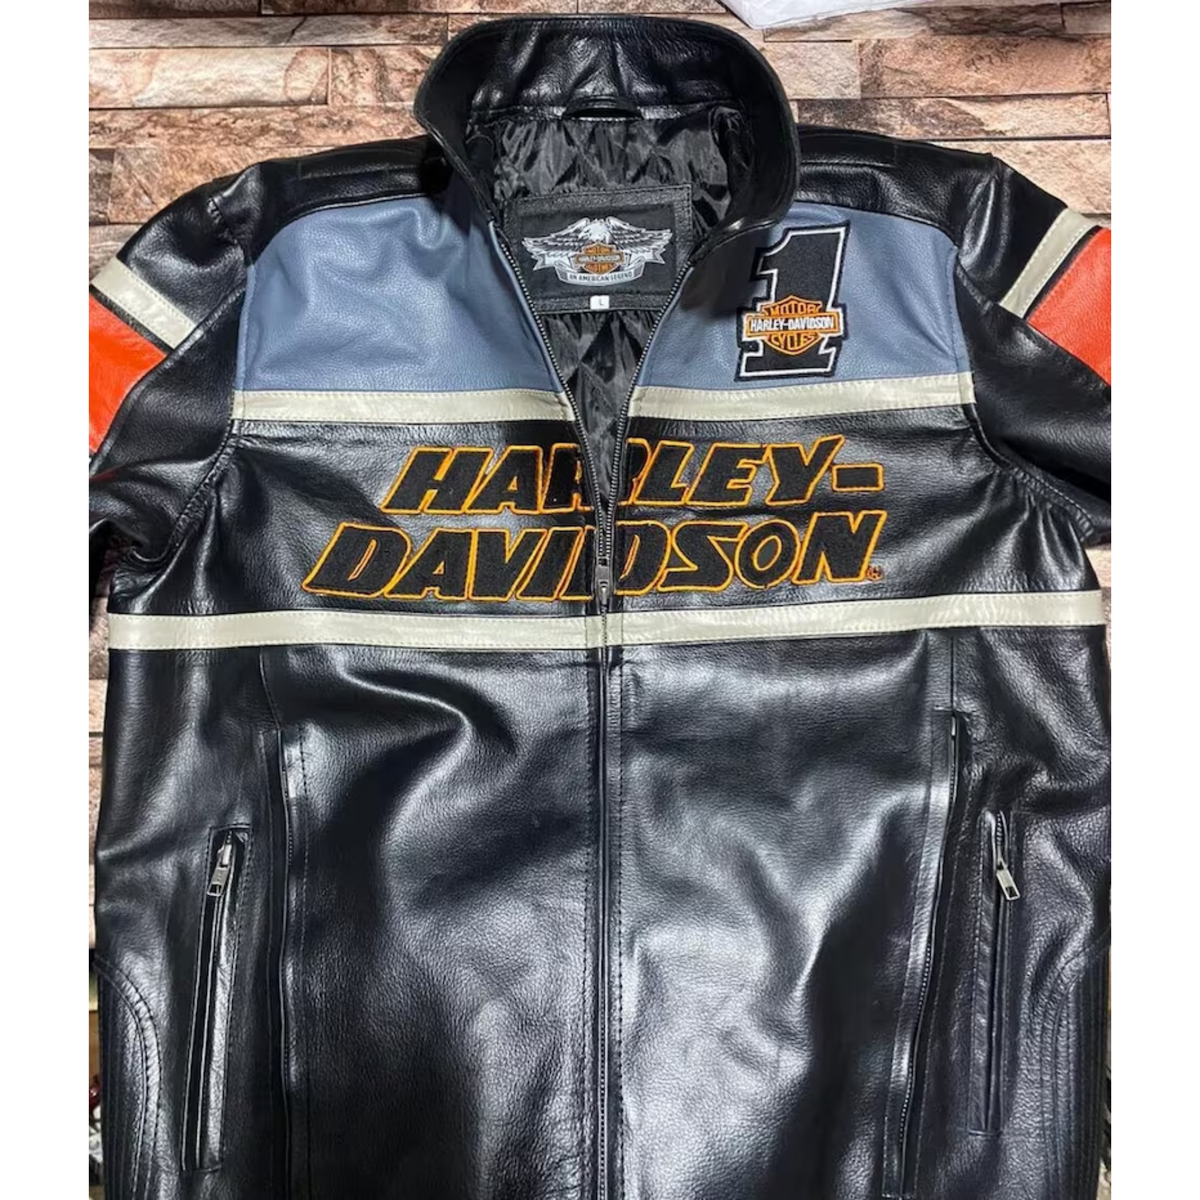 Harley Davidson Men's Motorcycle Racing Jacket Gift for Mens